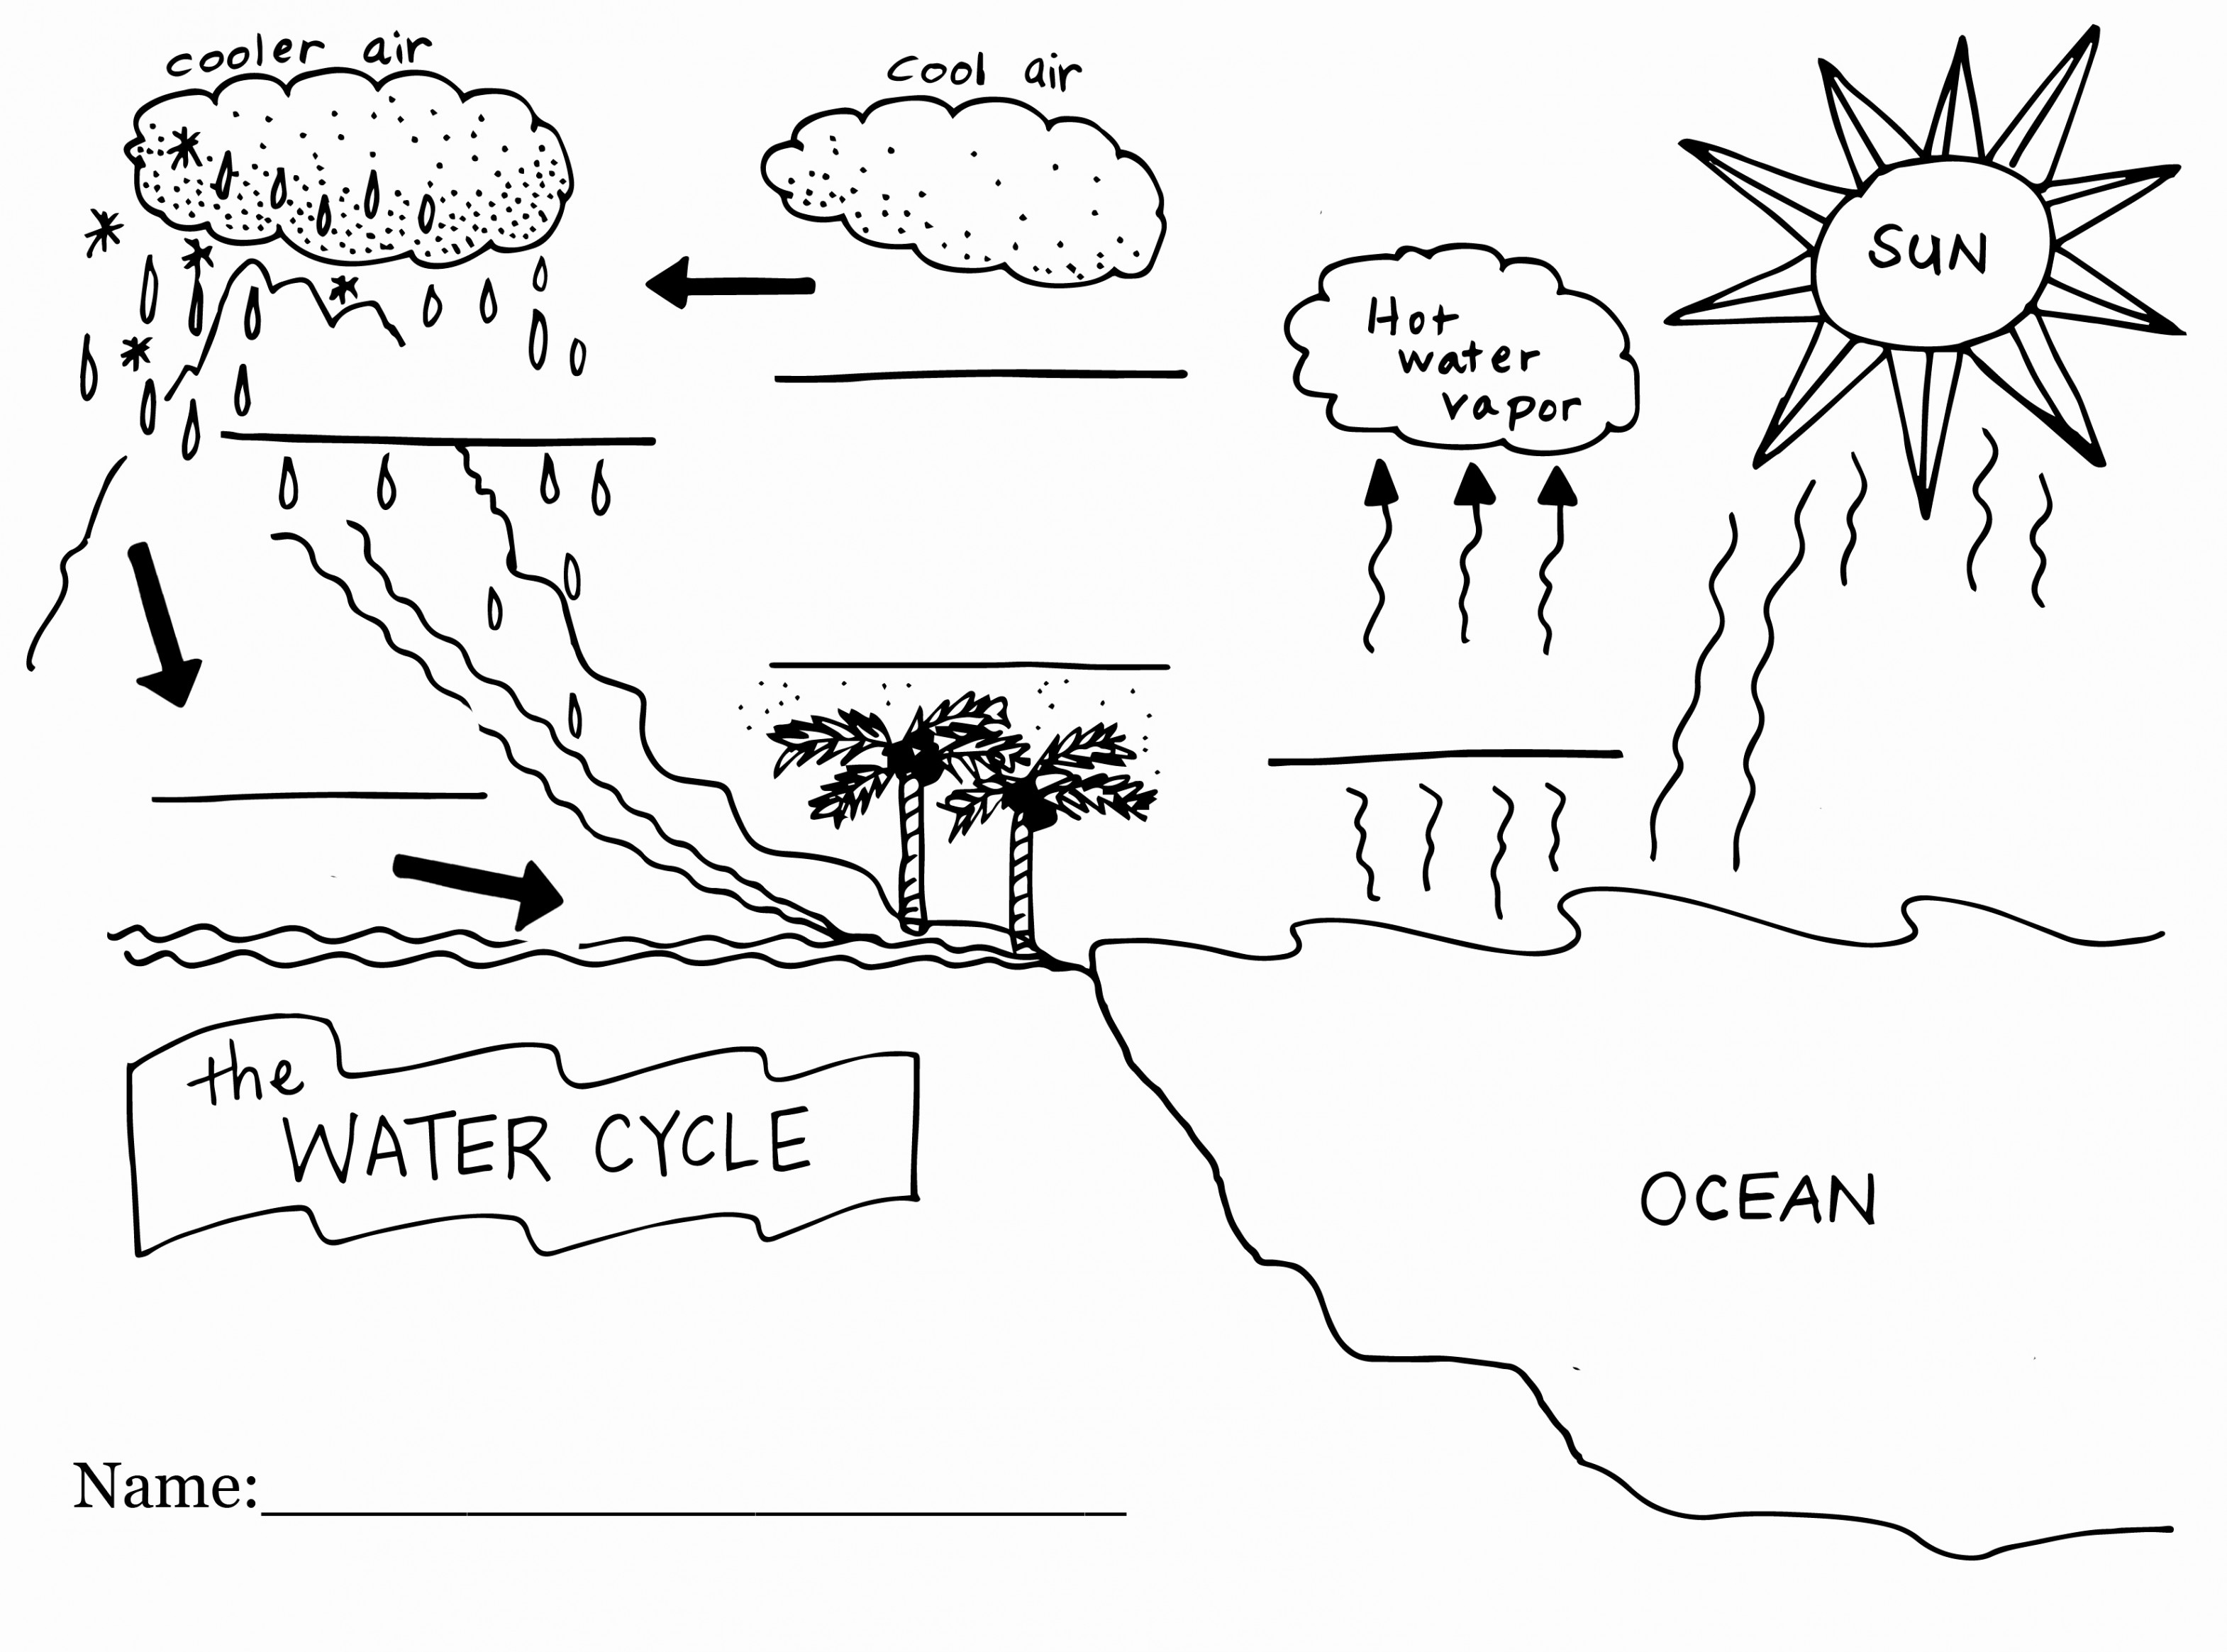 Water Cycle Diagram Water Cycle Diagram Blank Label Wiring Diagram Bookmark